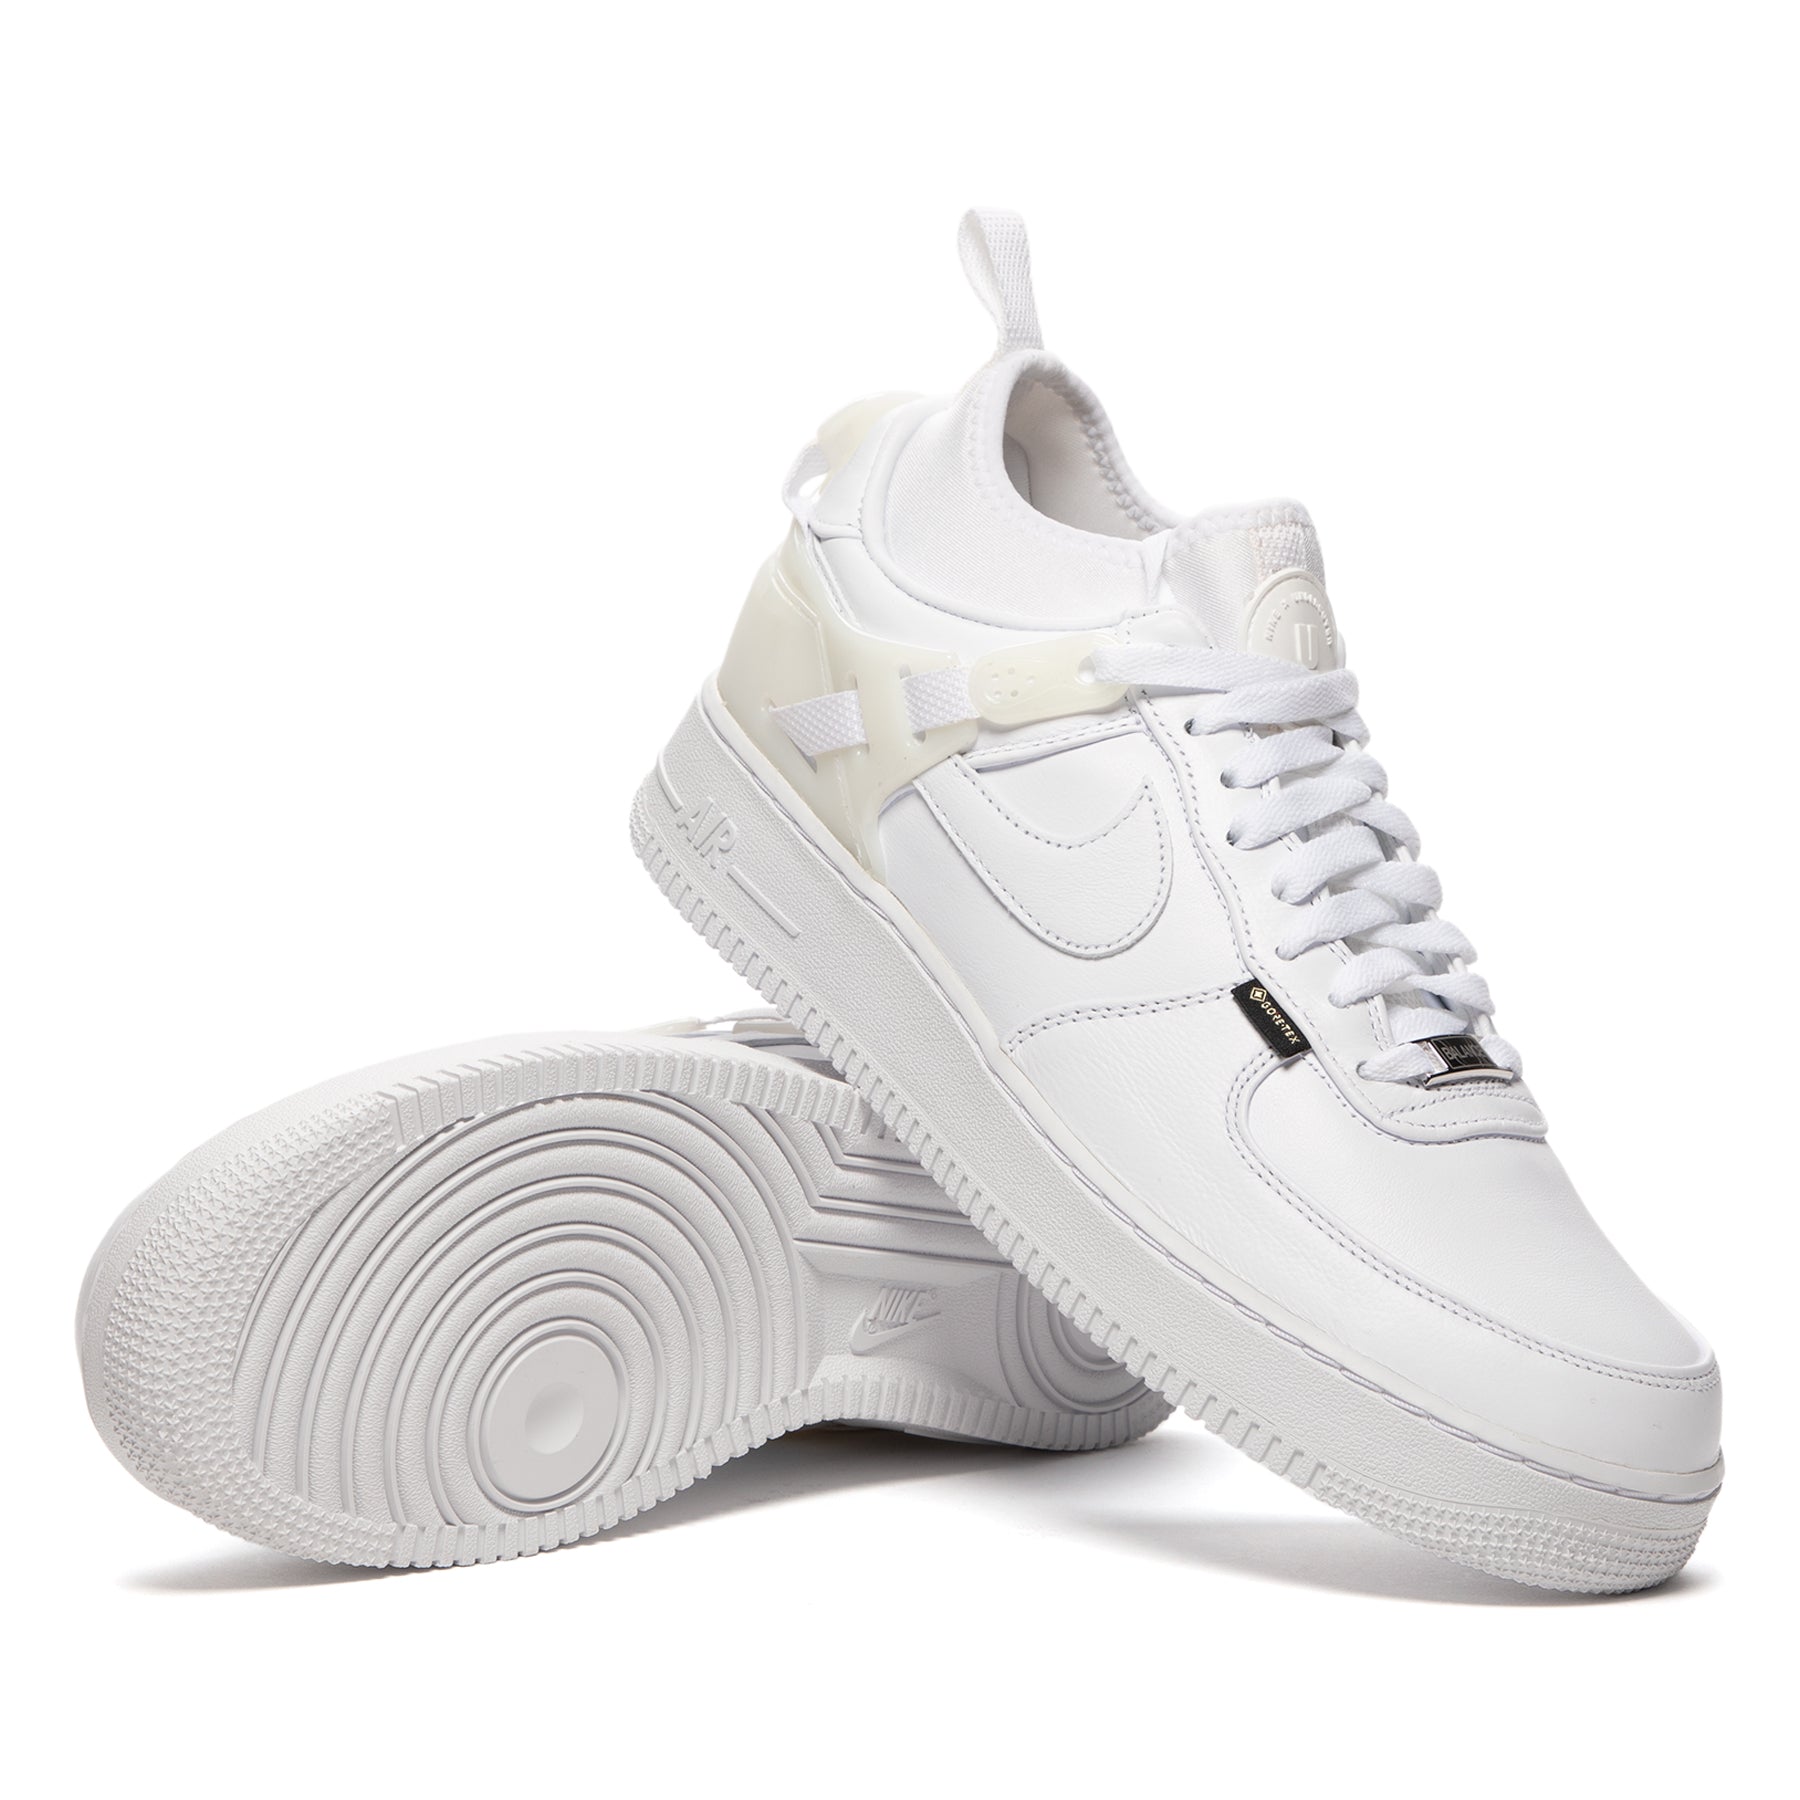 zSneakerHeadz on X: 2022 OFF-WHITE x NIKE AIR FORCE 1 #BKM detailed look!  💚🏛  / X